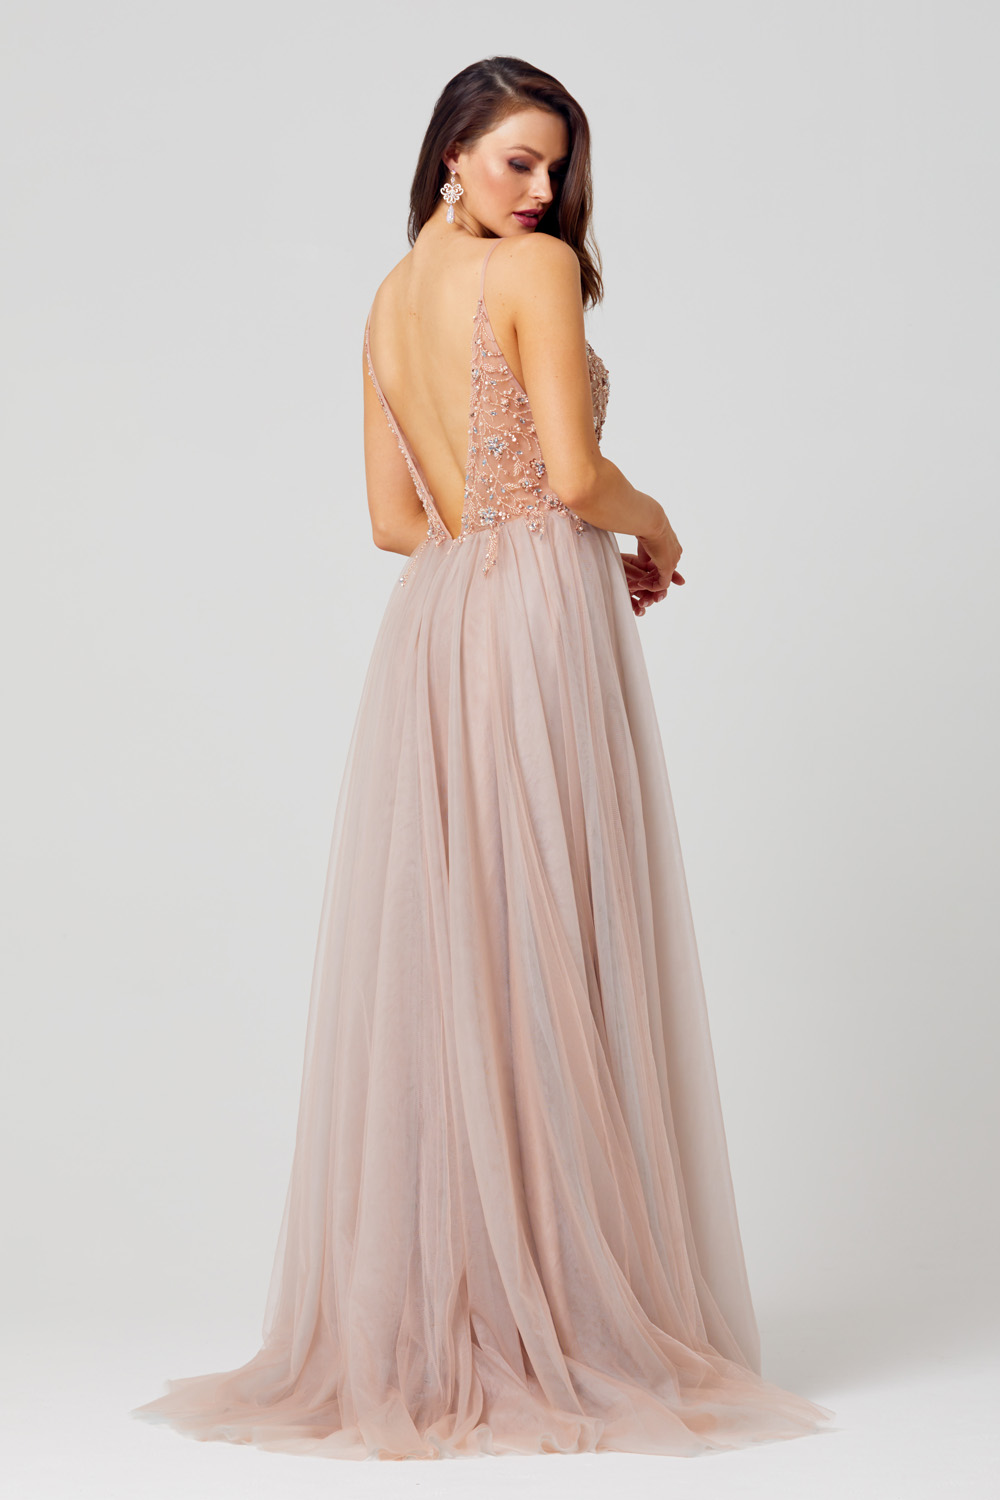 CASSIE PO869 Papillon 2020 Evening dress by Tania Olsen Designs